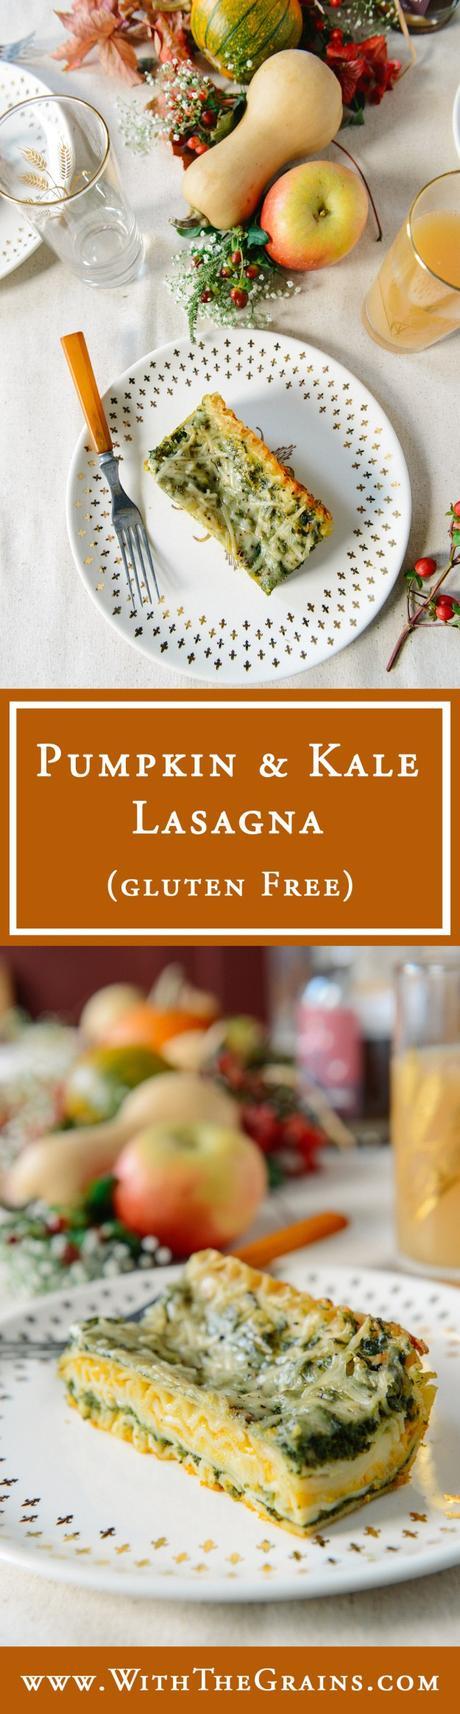 Gluten Free Pumpkin & Kale Lasagna for a Fall Gathering // www.WithTheGrains.com